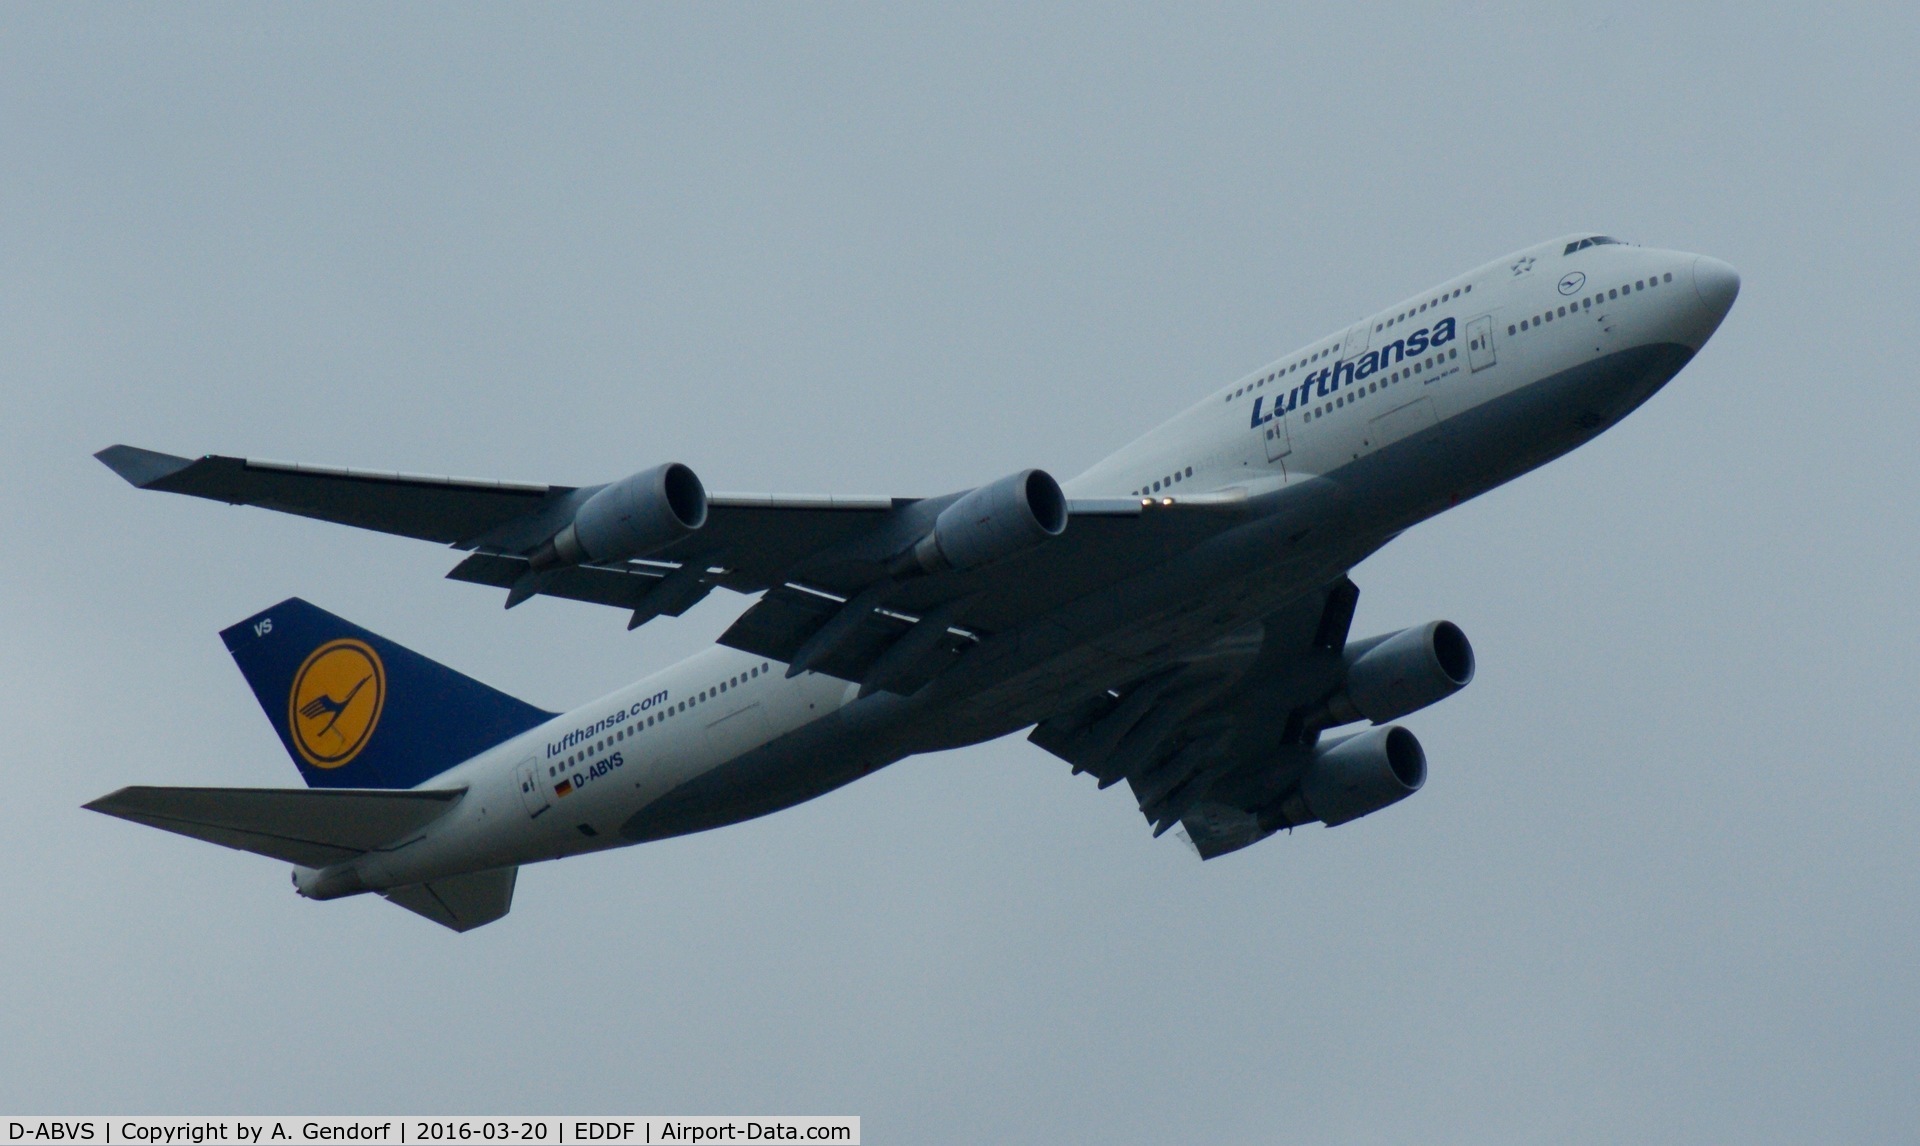 D-ABVS, 1997 Boeing 747-430 C/N 28286, Lufthansa, is here climbing out at Frankfurt Rhein/Main(EDDF)